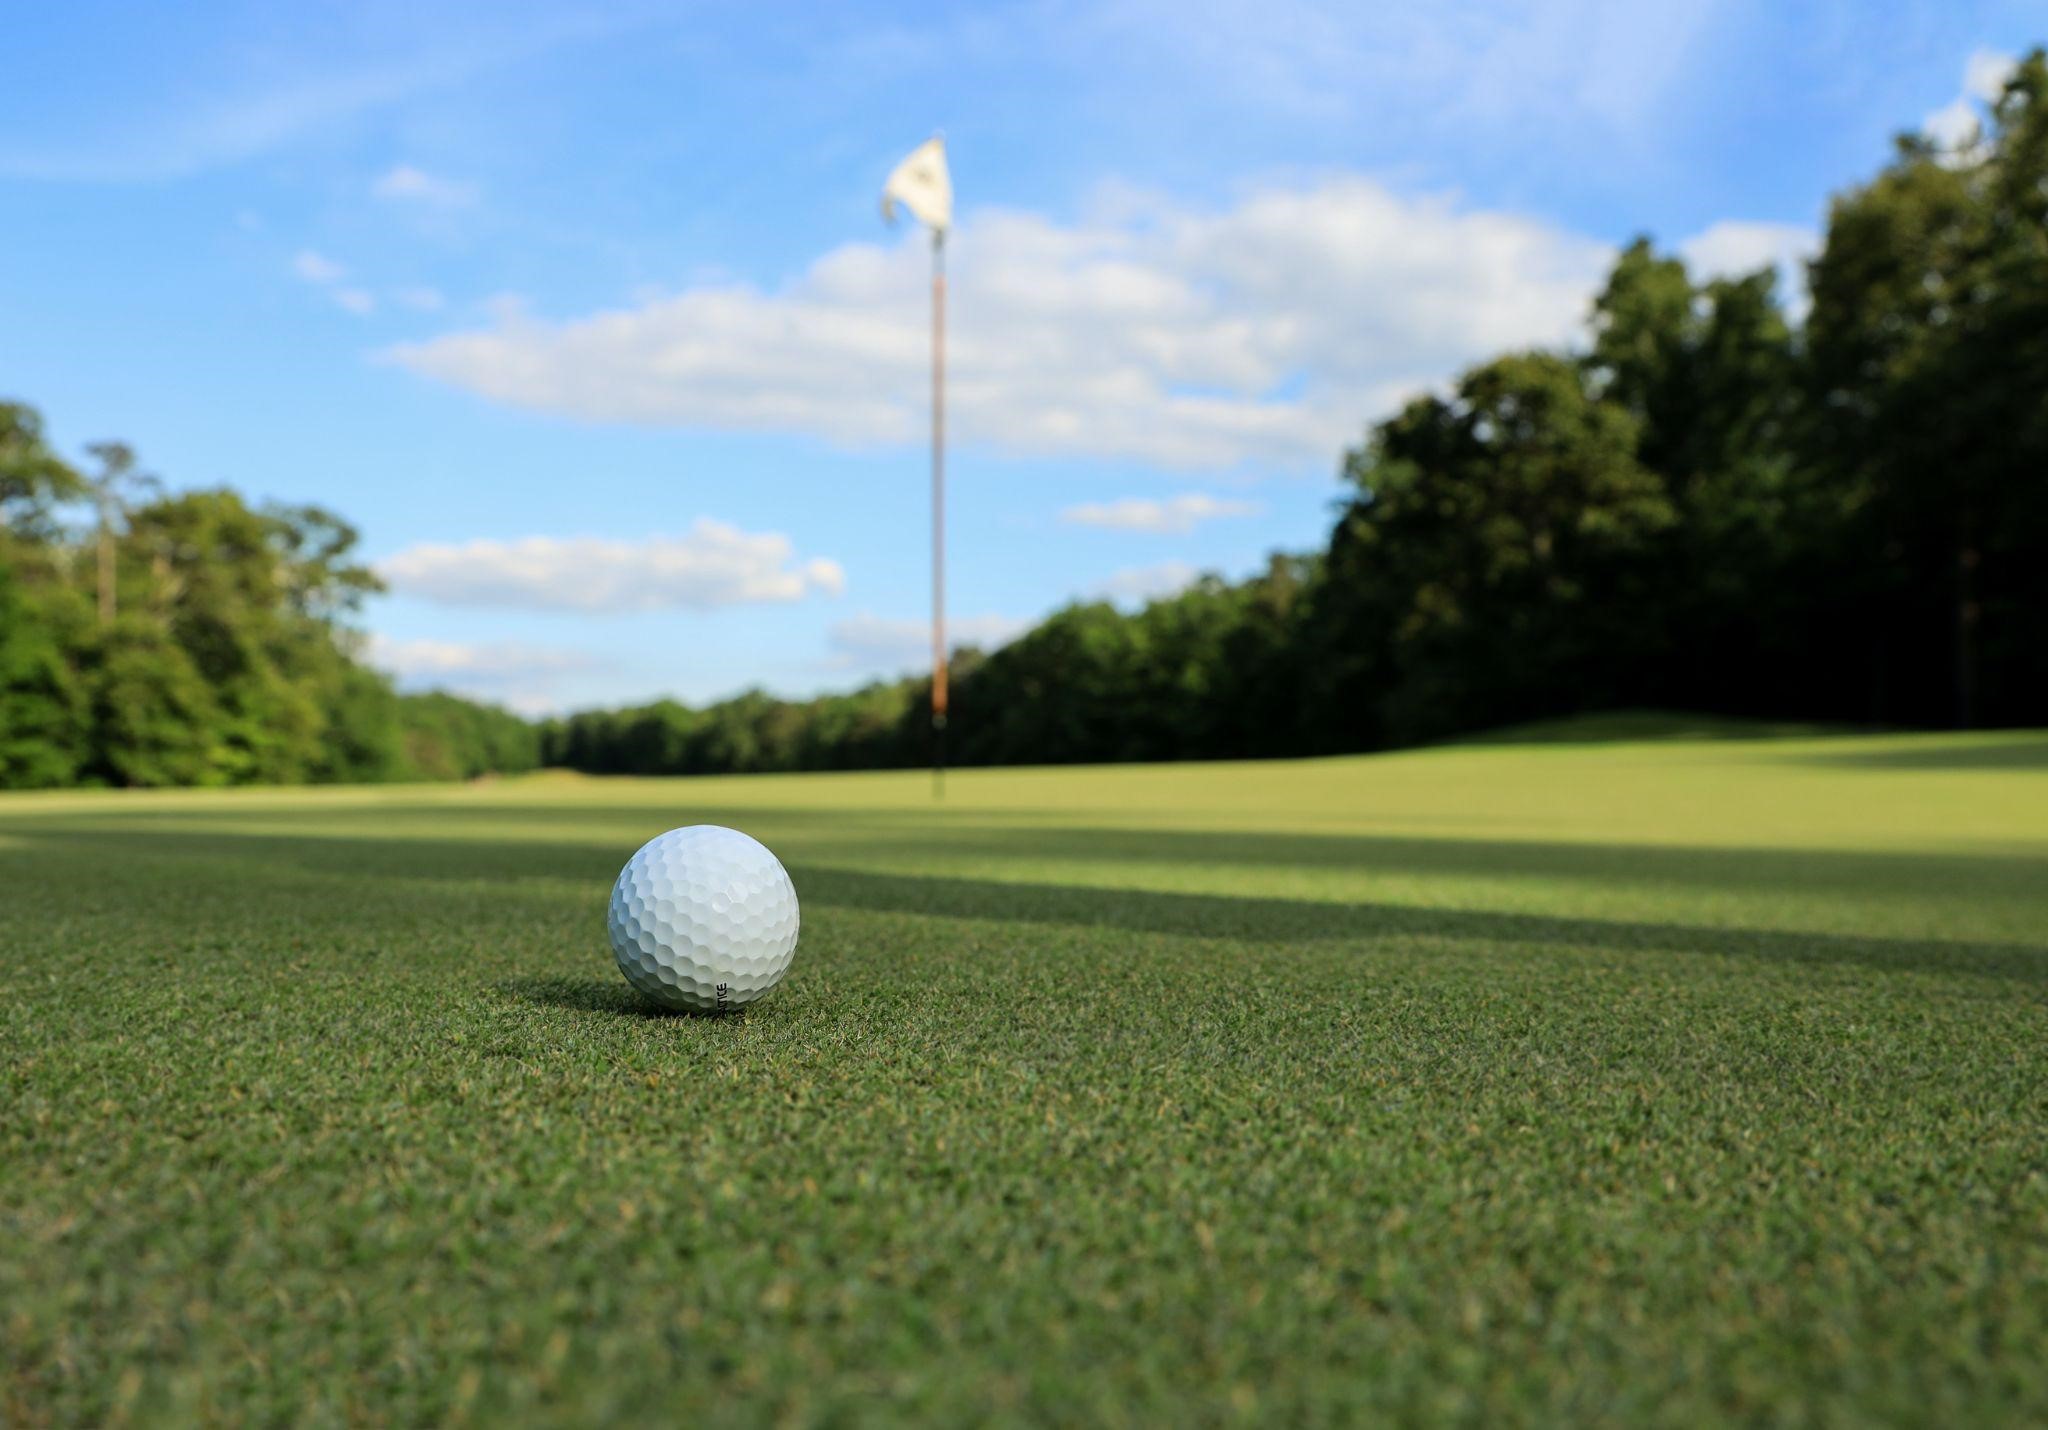 golfball on golf field, trees, flag